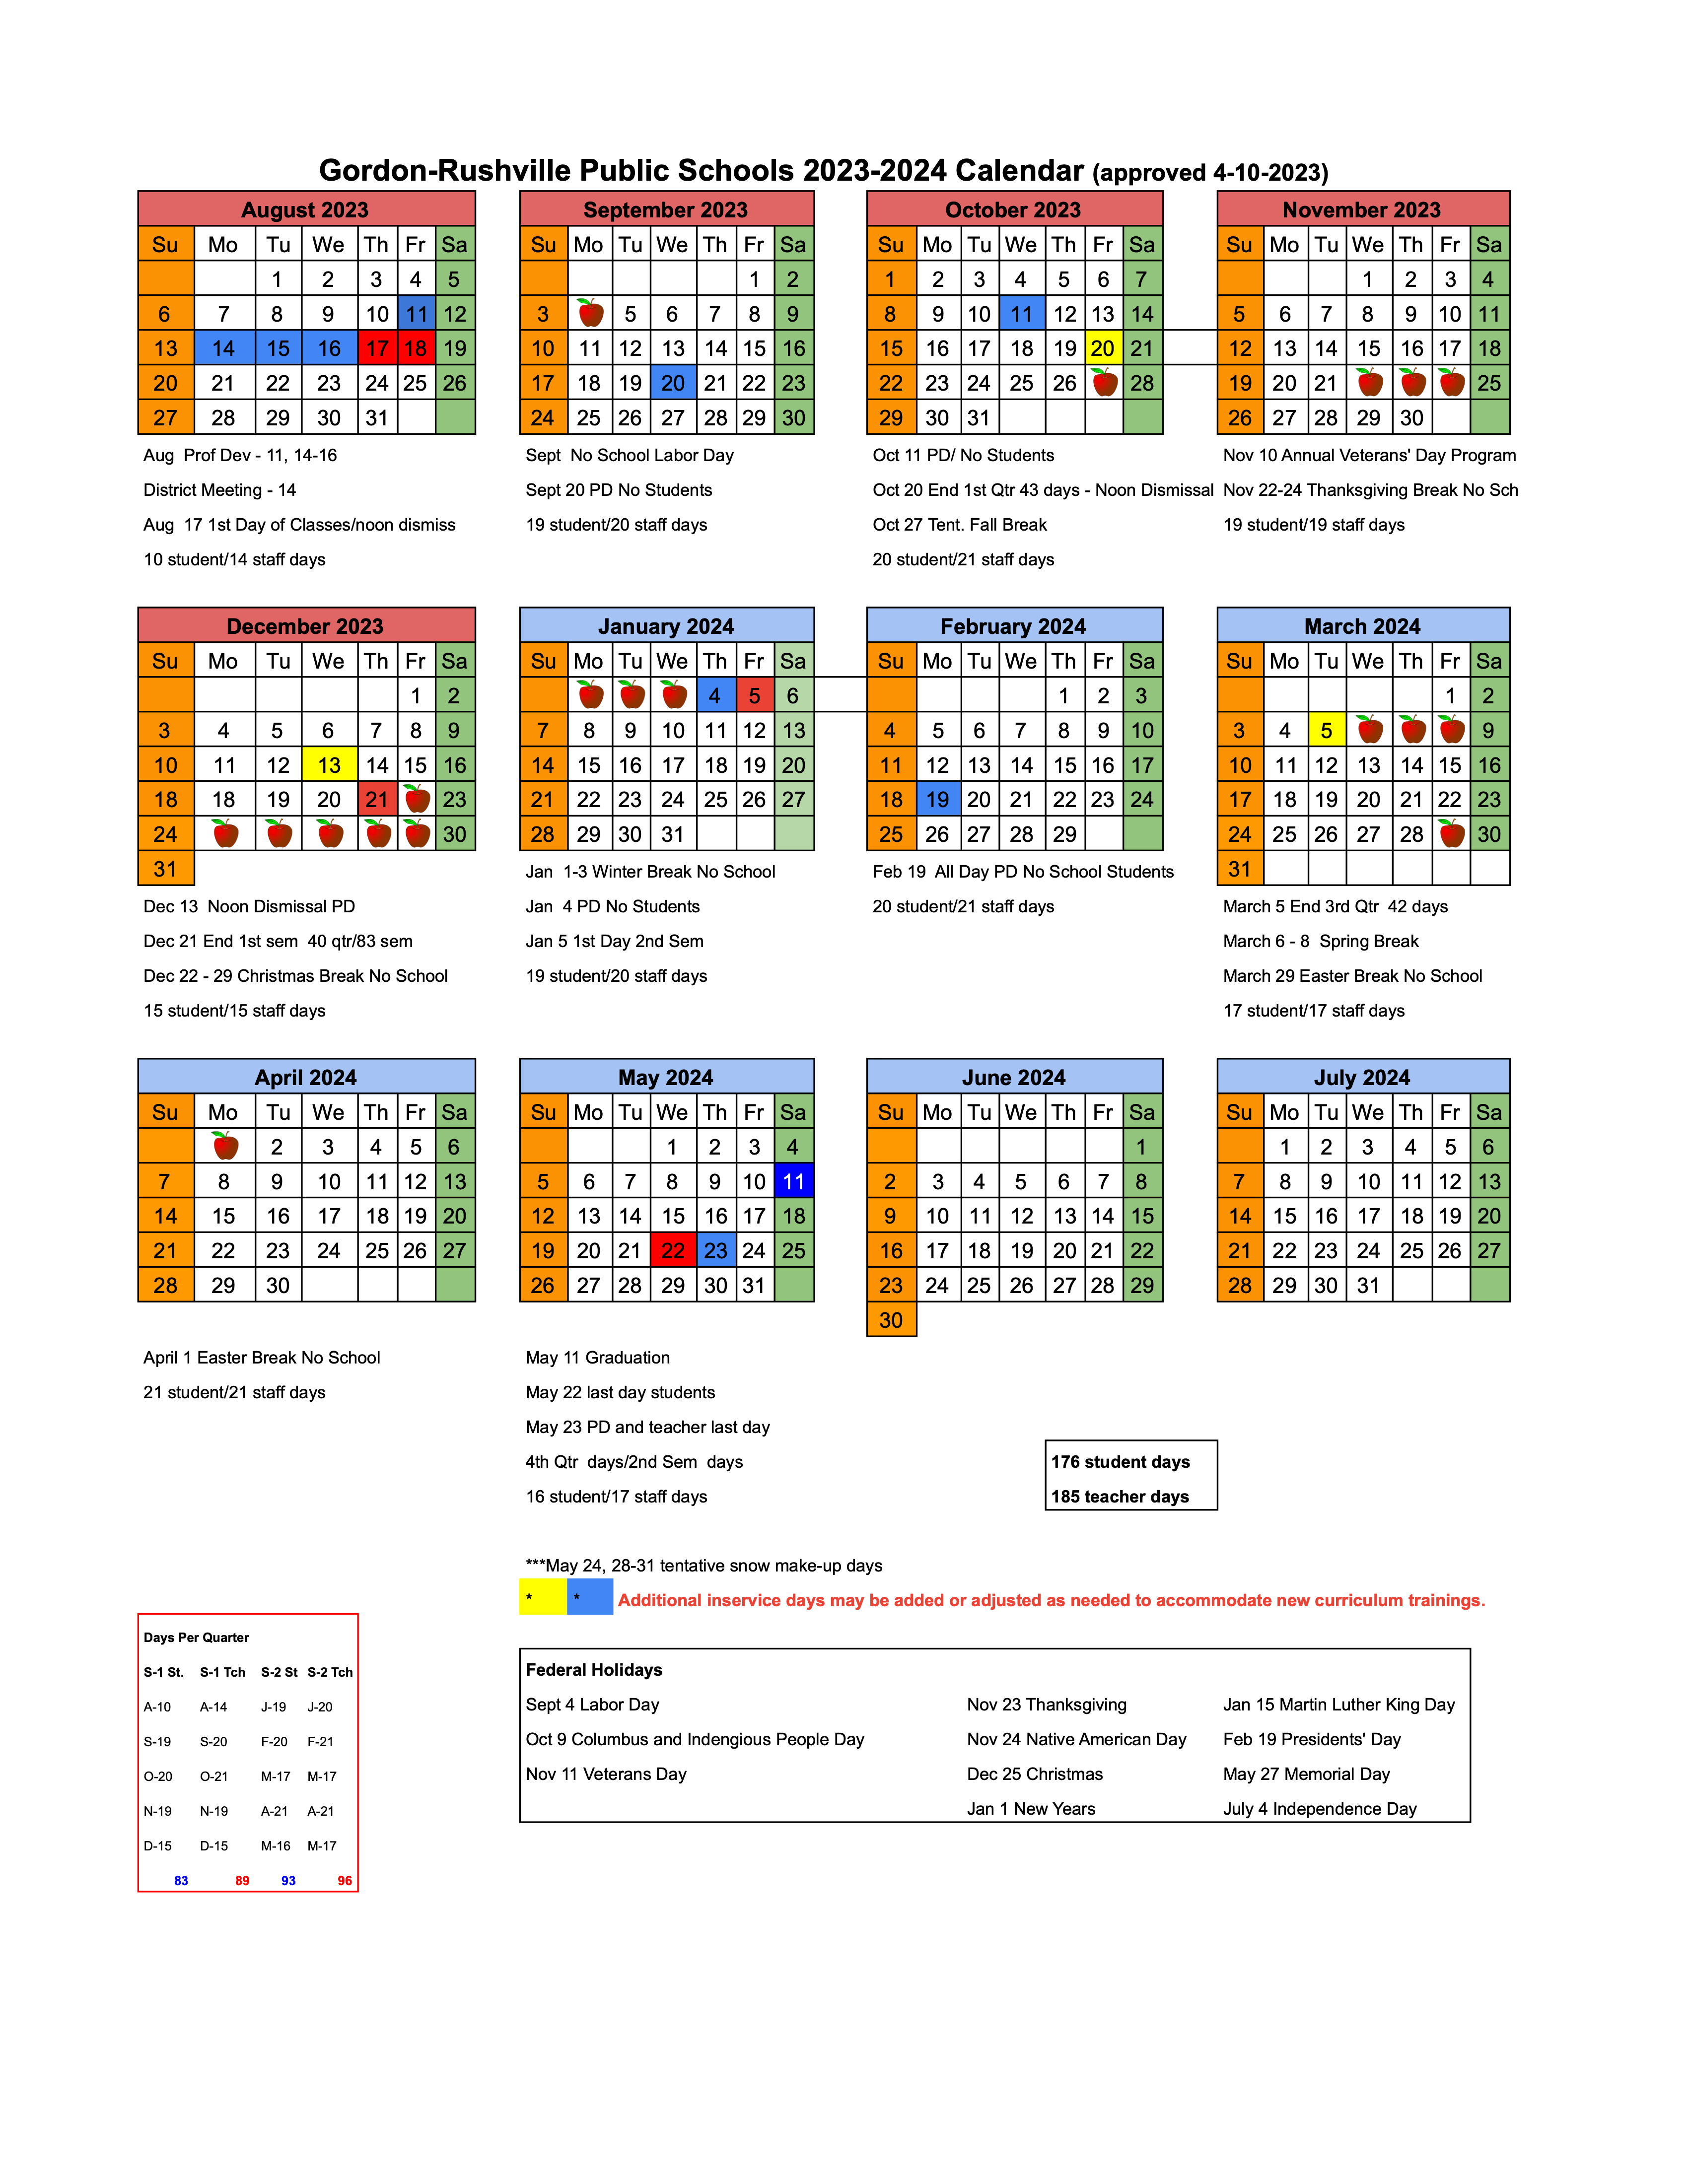 grps-2023-24-school-day-calendar-gordon-rushville-public-schools